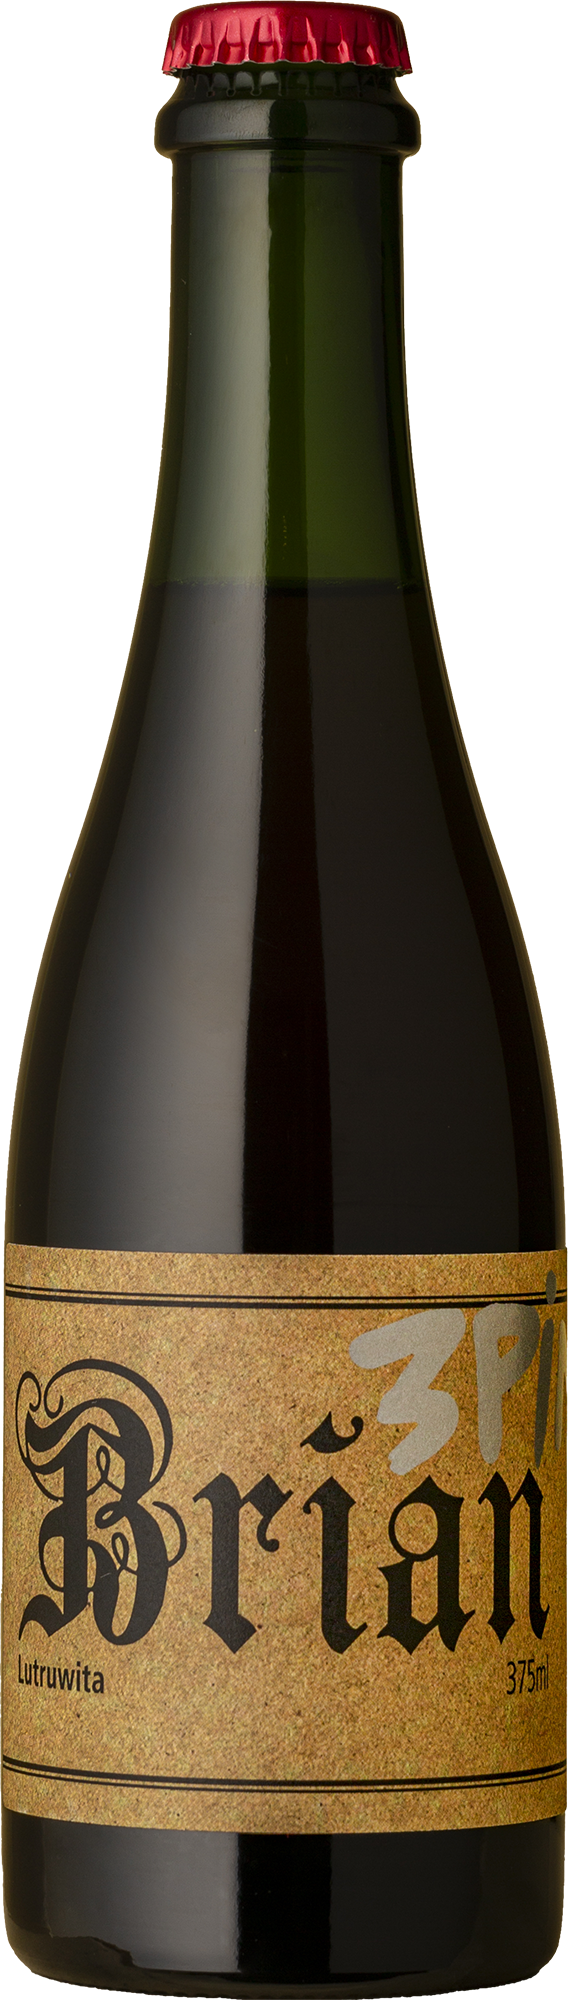 Brian Wines - 3 Pinots Blend 2021 375ml Red Wine